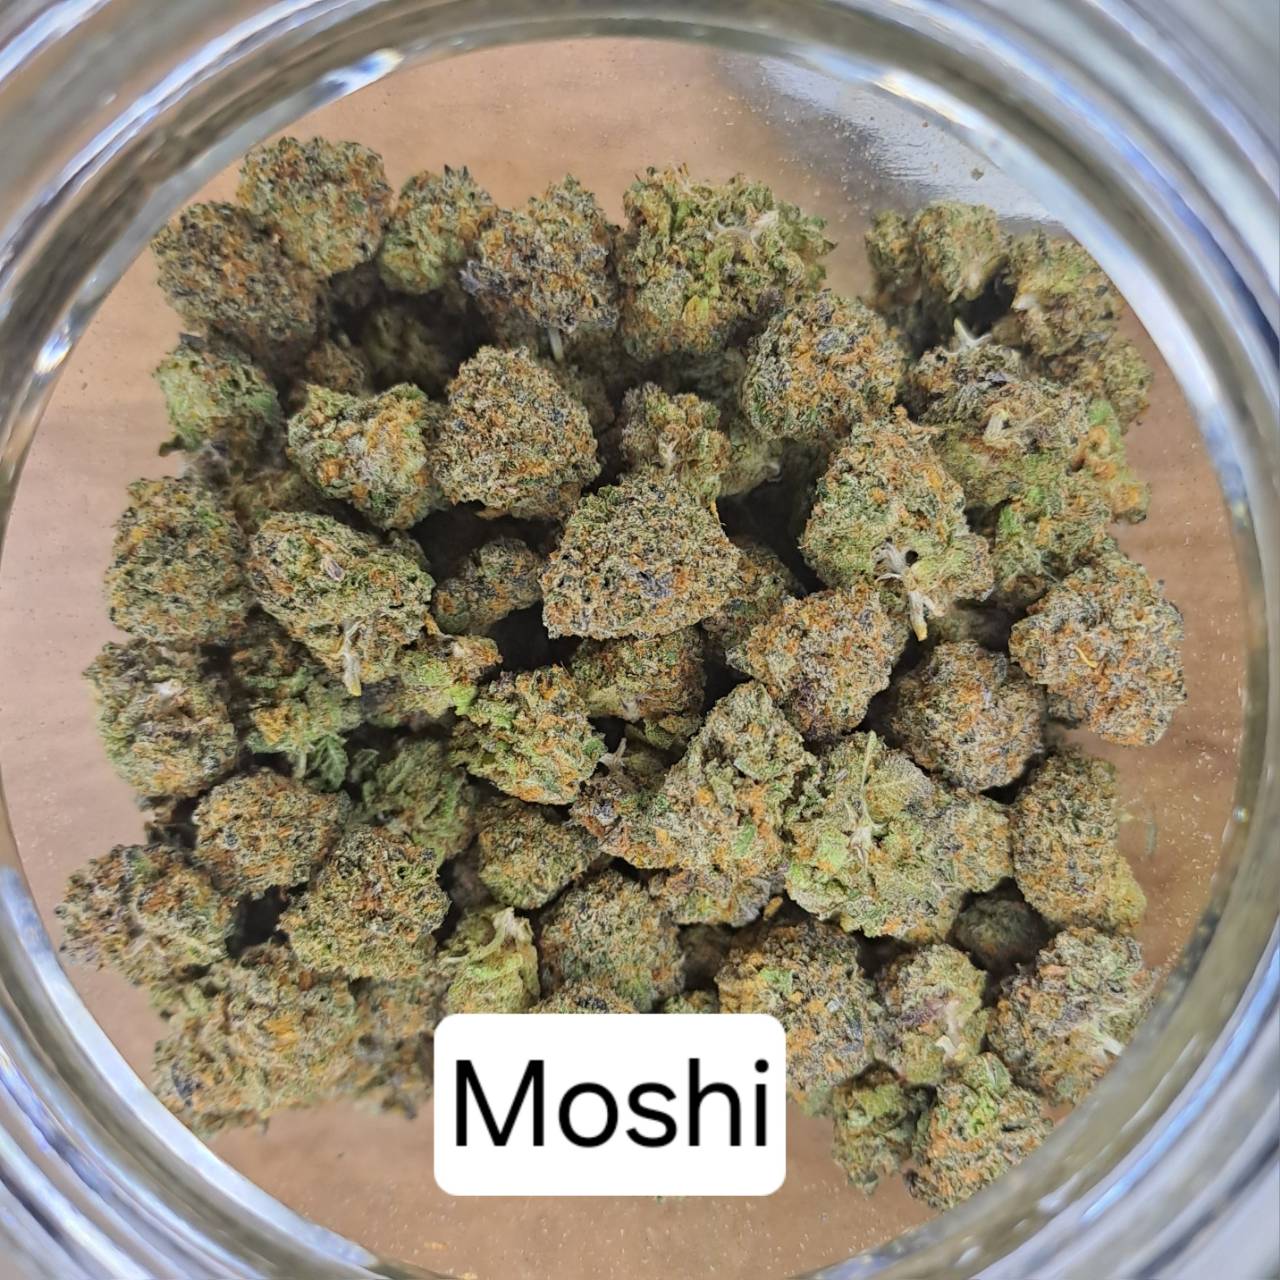 Product Image for Moshi